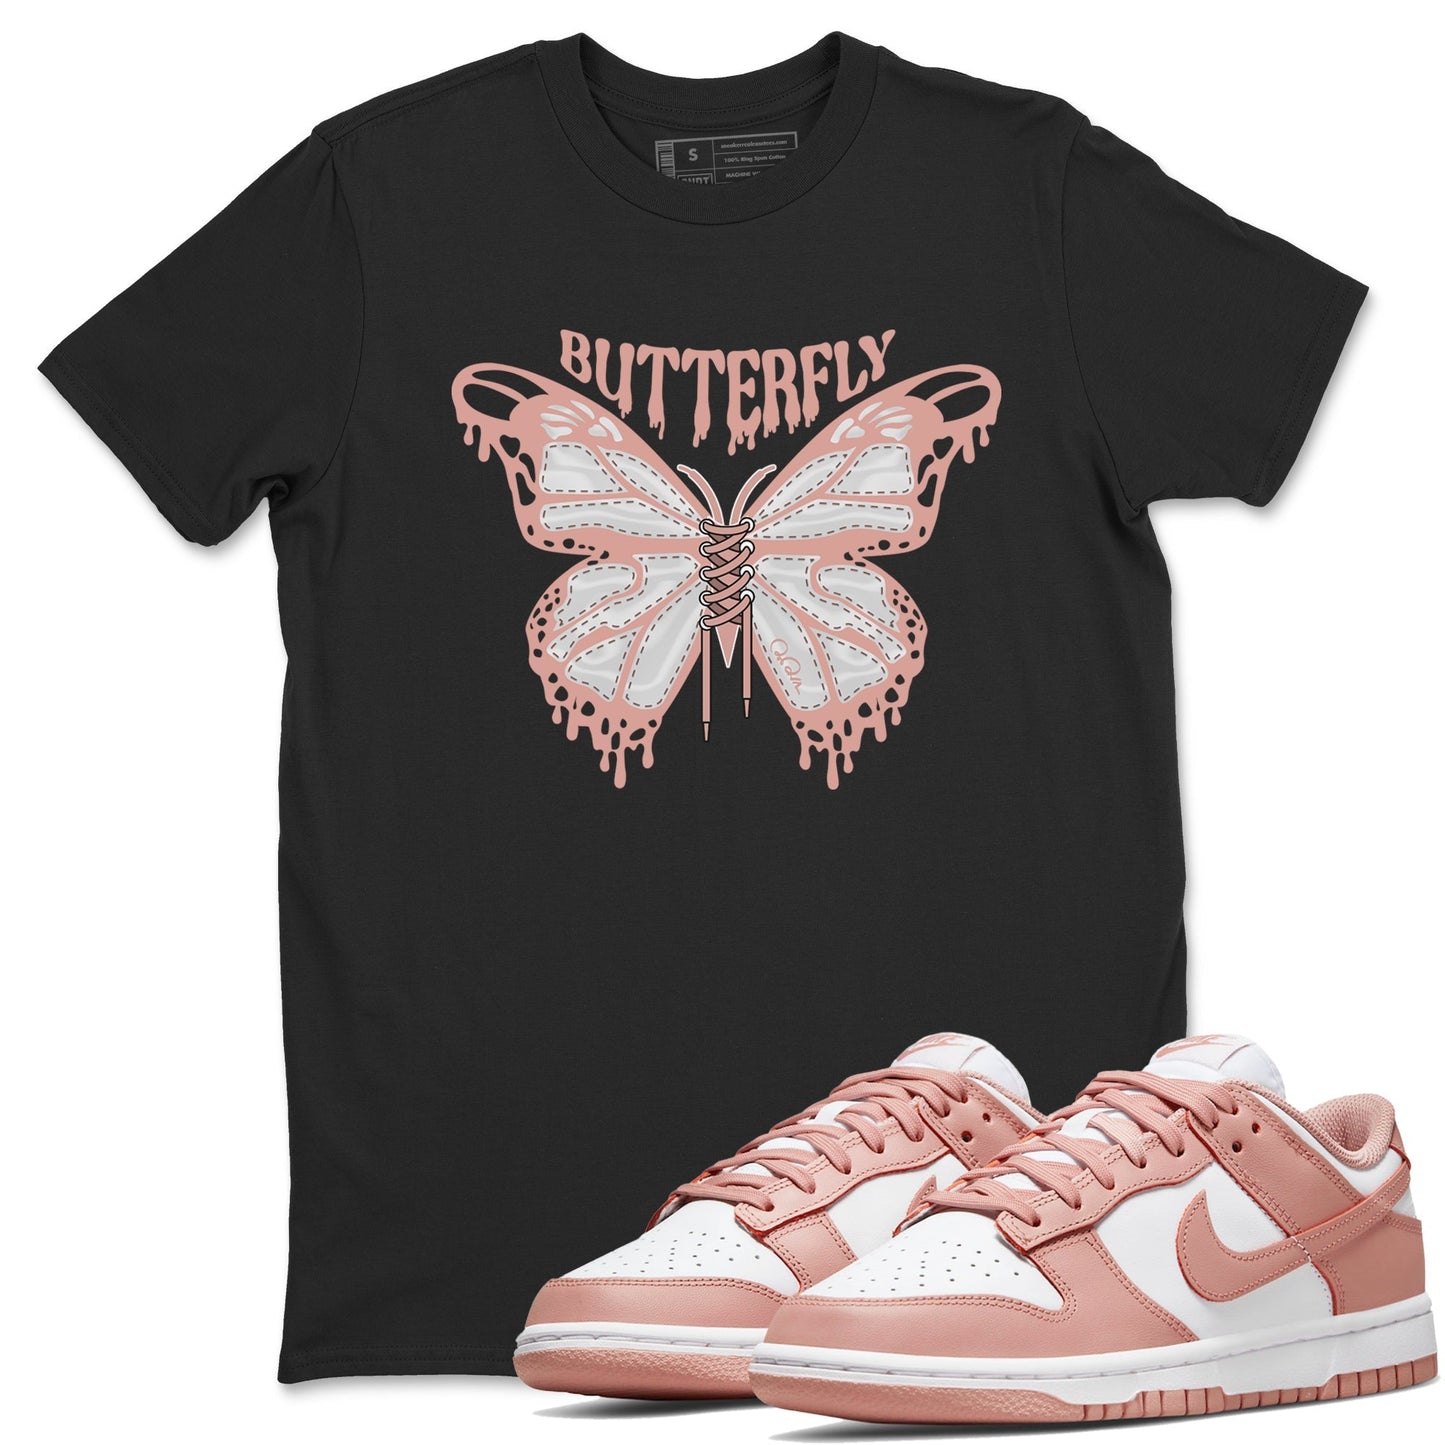 Dunk Rose Whisper shirt to match jordans Butterfly Streetwear Sneaker Shirt Nike Dunk LowRose Whisper Drip Gear Zone Sneaker Matching Clothing Unisex Black 1 T-Shirt